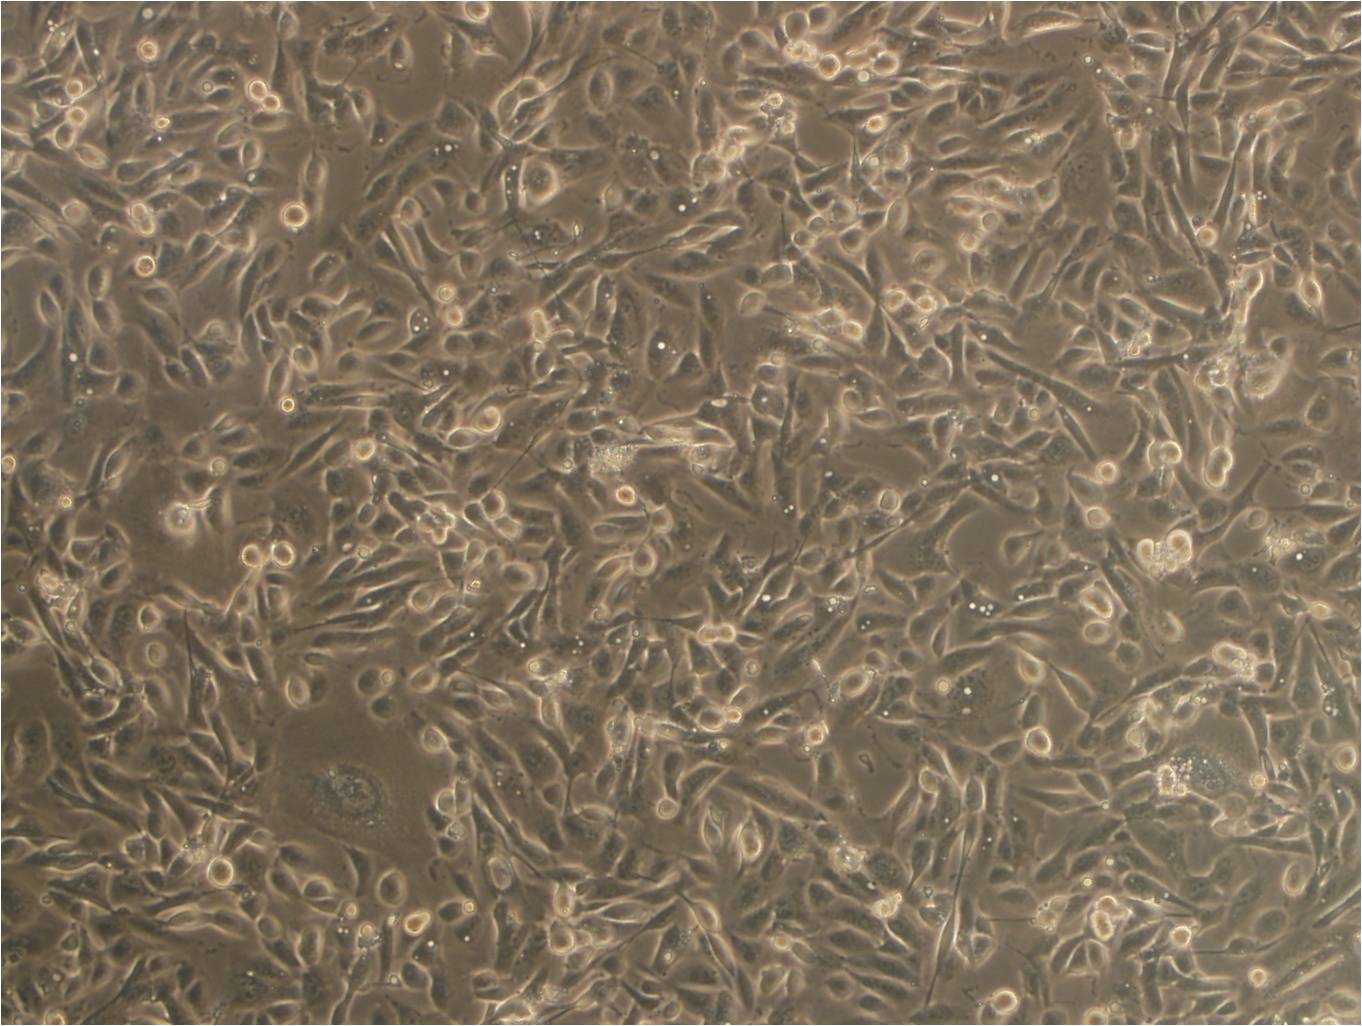 NCI-H187 epithelioid cells人视网膜母细胞瘤细胞系,NCI-H187 epithelioid cells